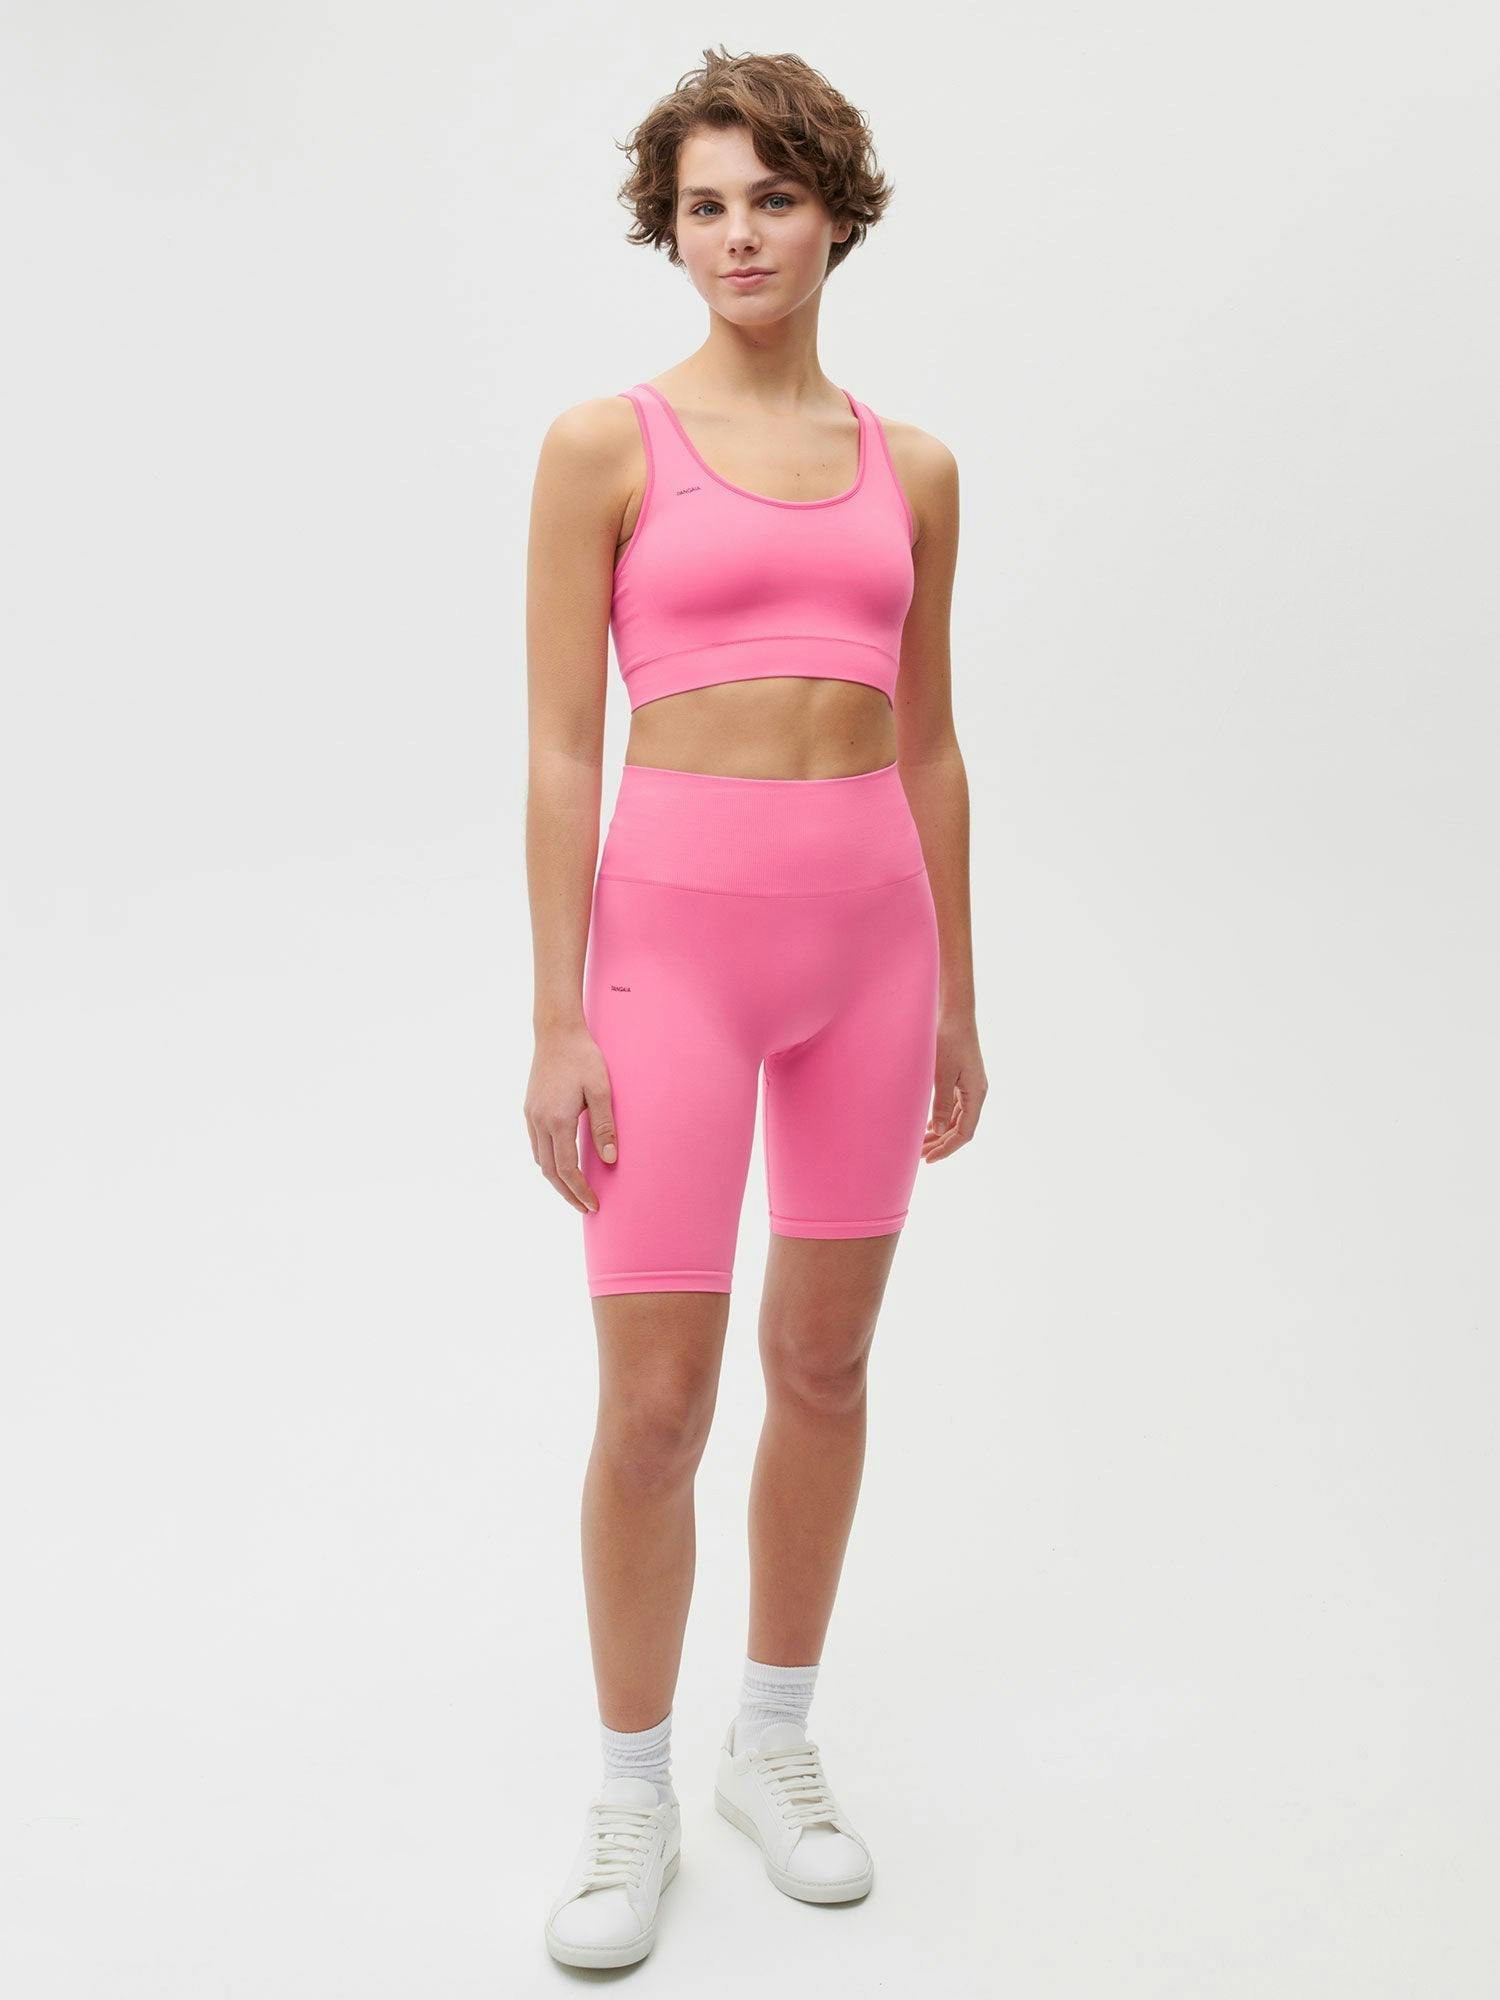 https://cdn.shopify.com/s/files/1/0035/1309/0115/products/Activewear-Womens-Sports-Bra-Watermelon-Pink-Female-4.jpg?v=1662476210